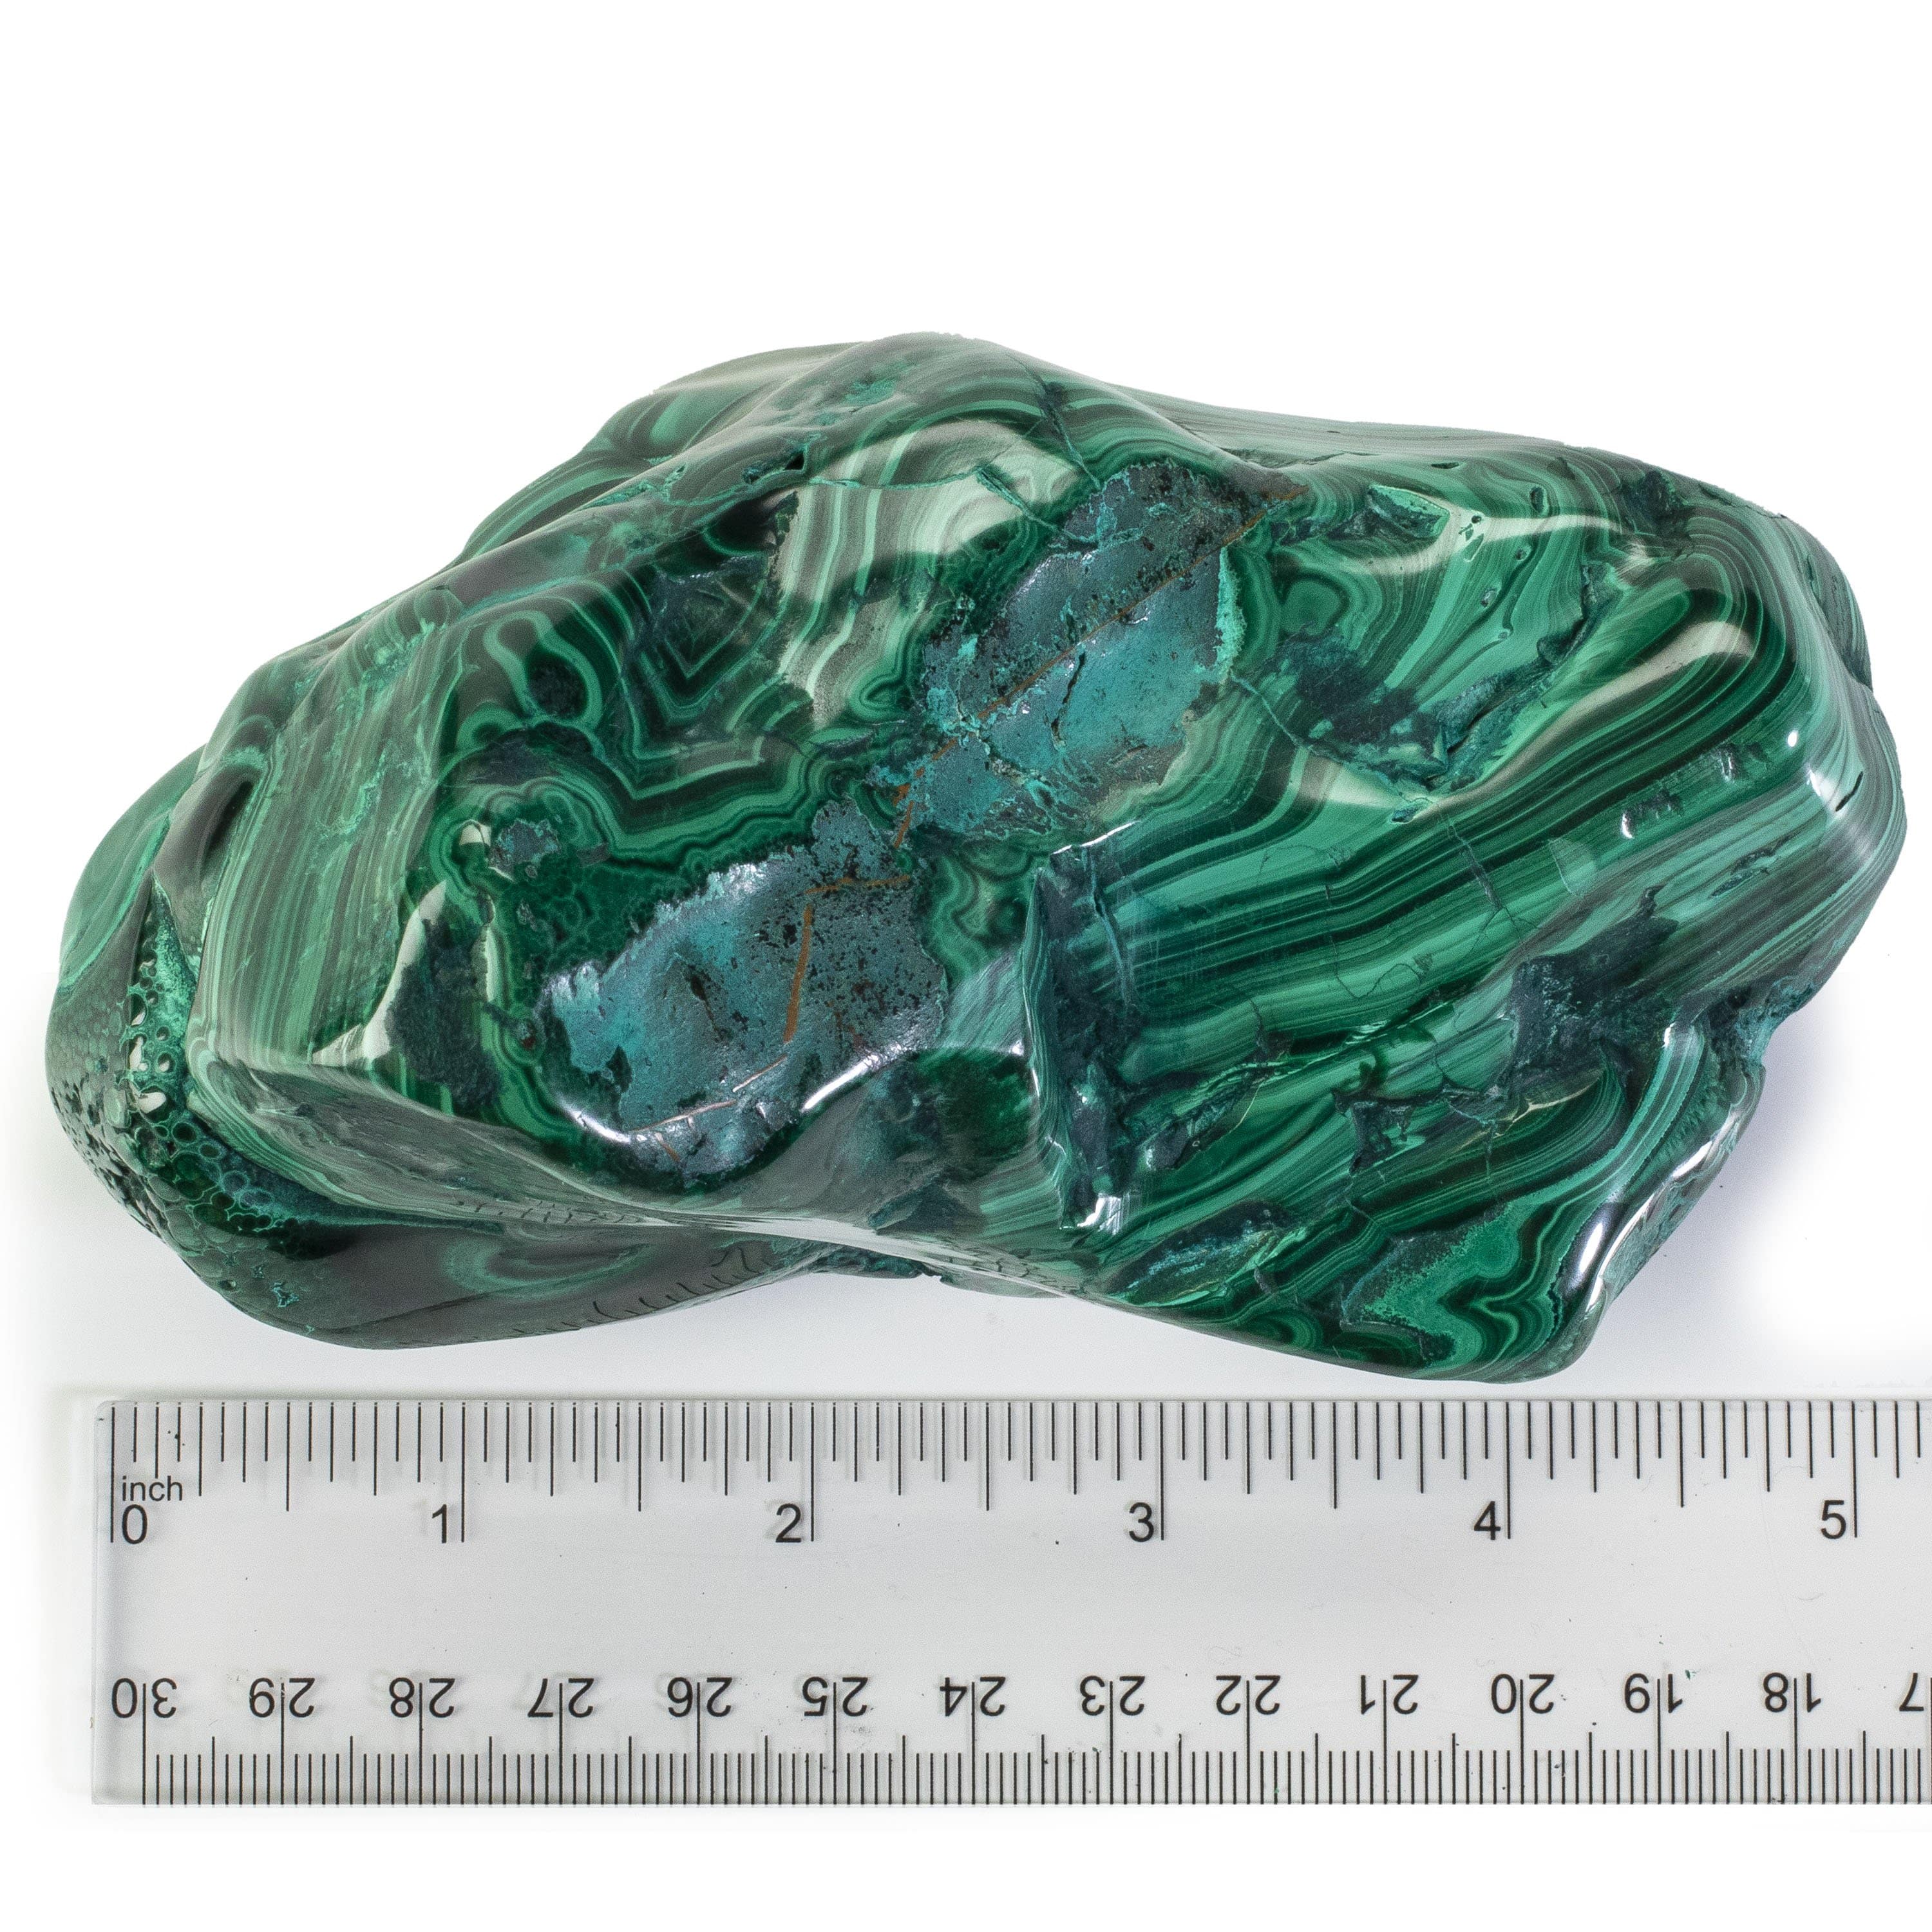 Kalifano Malachite Rare Natural Green Malachite with Blue Chrysocolla Freeform Specimen from Congo - 1.1 kg / 2.4 lbs MAC1100.003